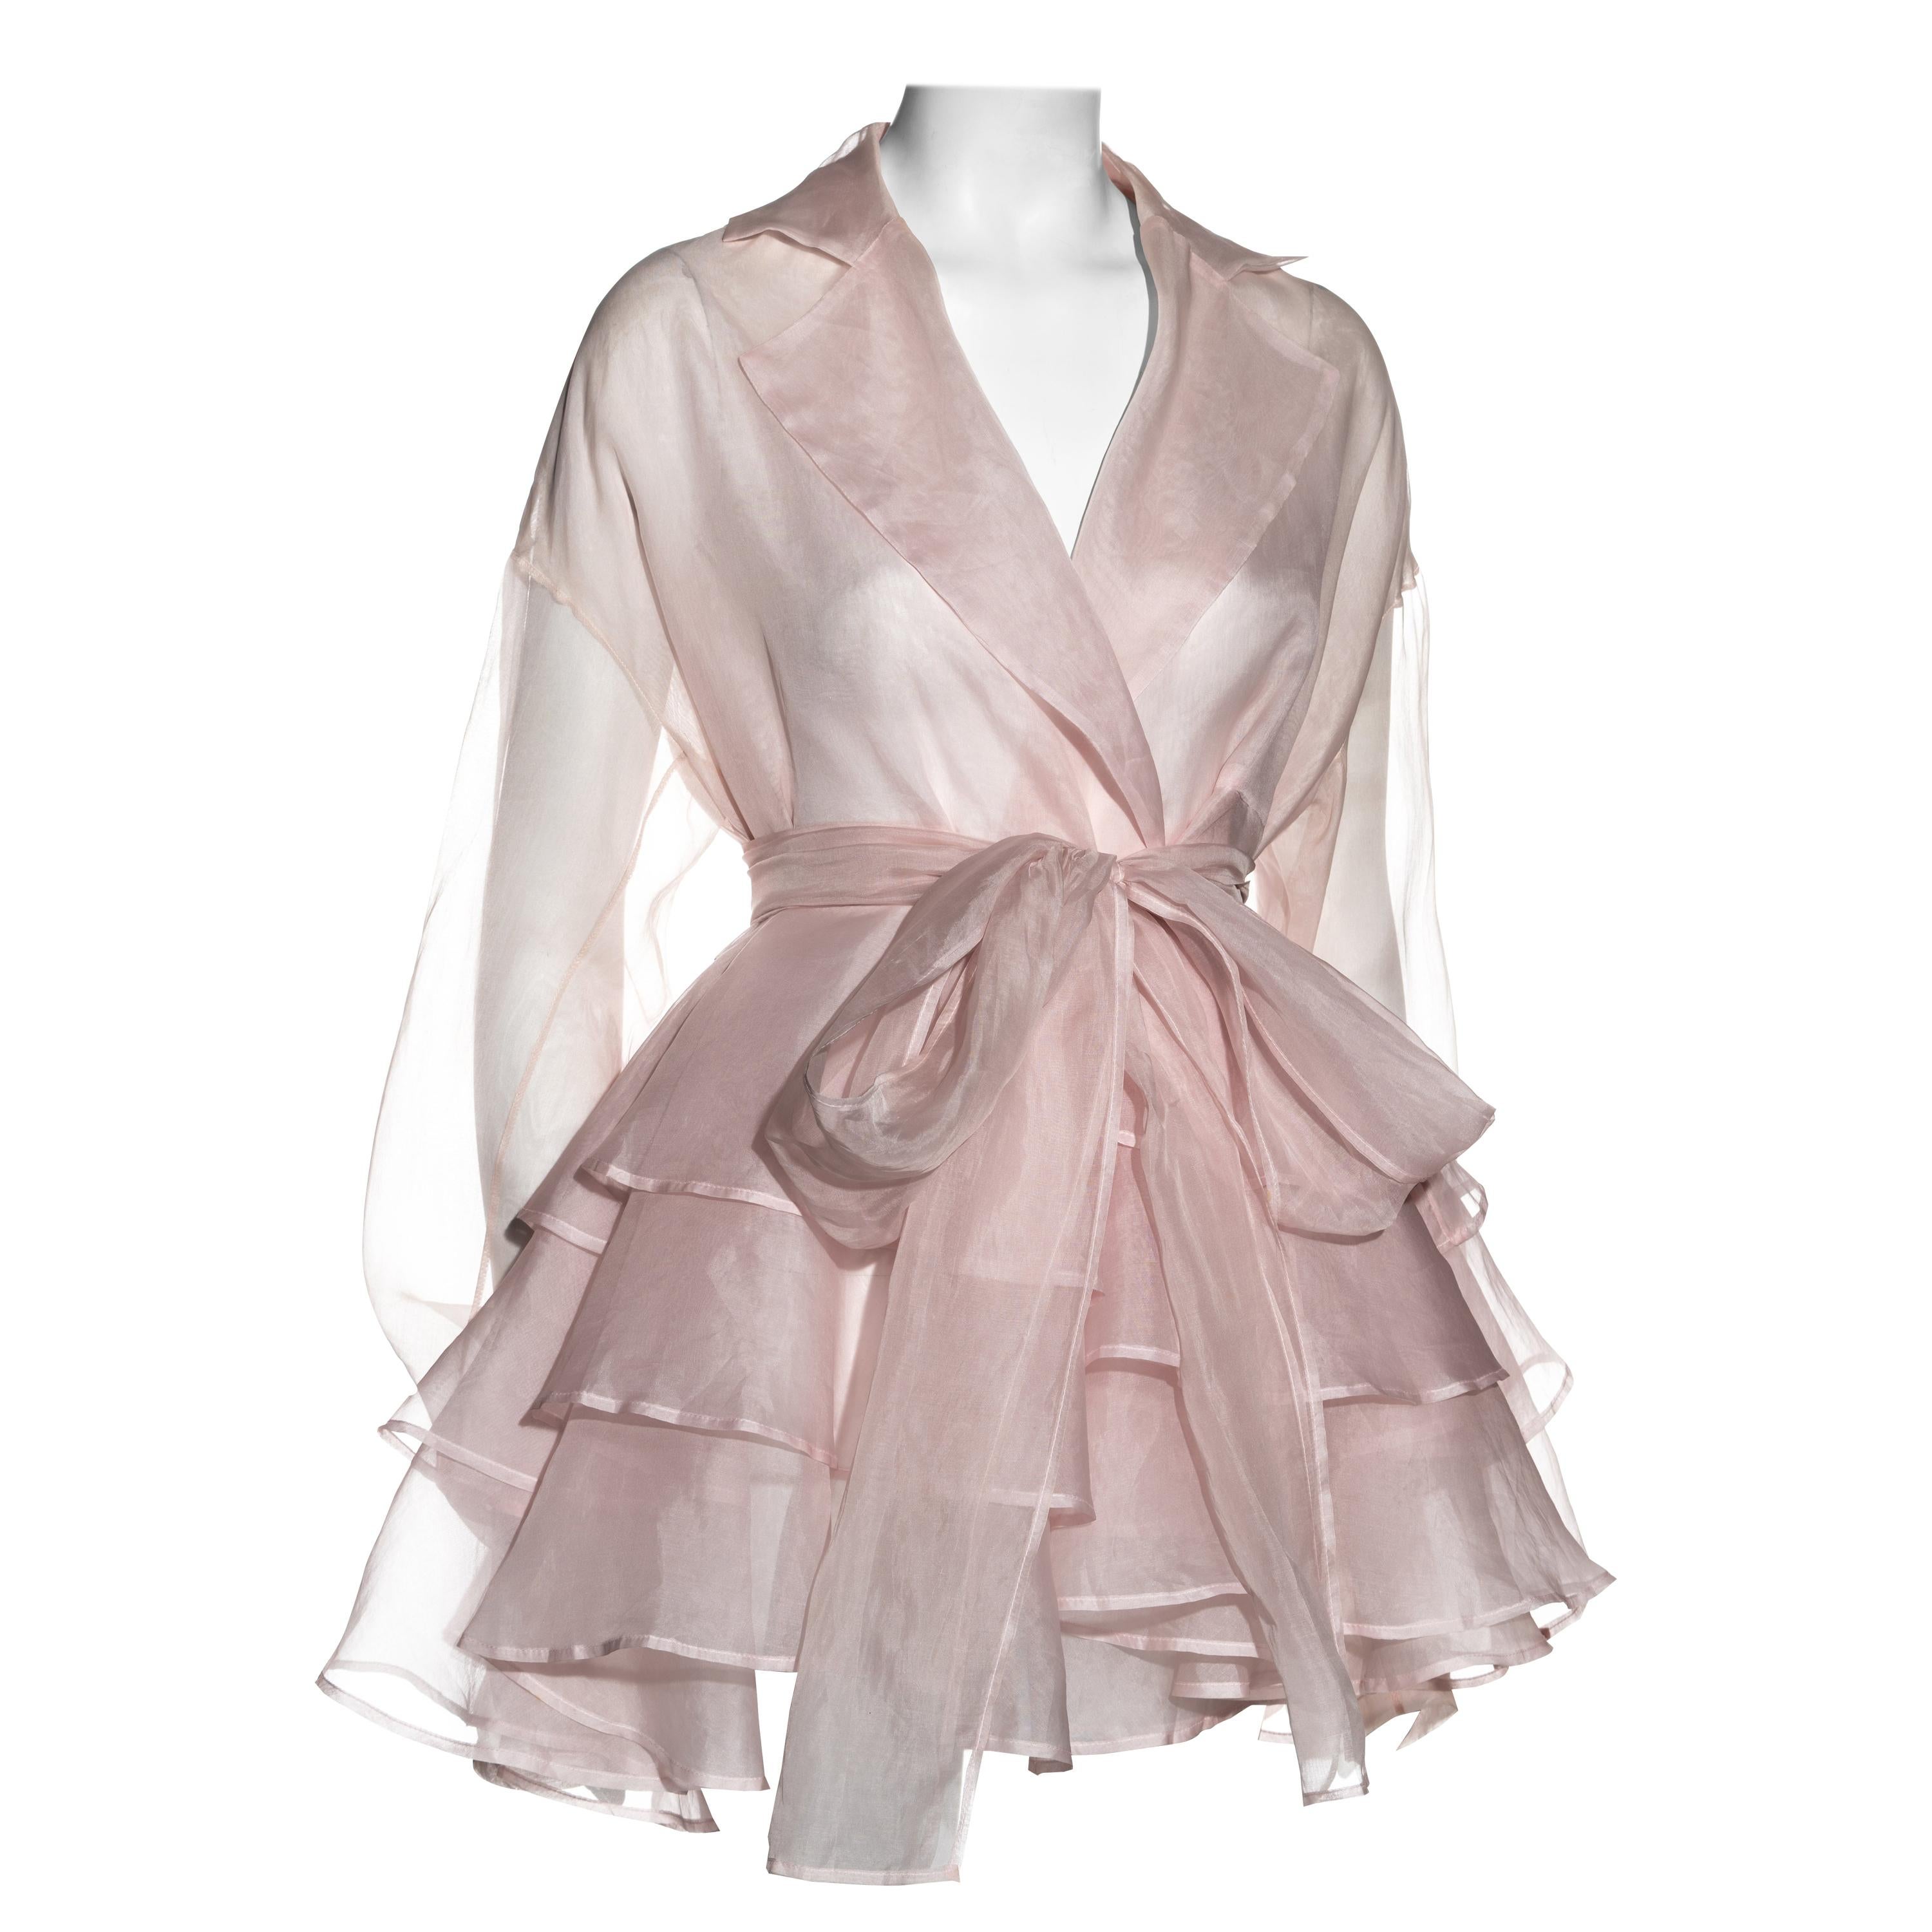 Dolce & Gabbana pale pink silk organza ruffled coat dress, ss 1992